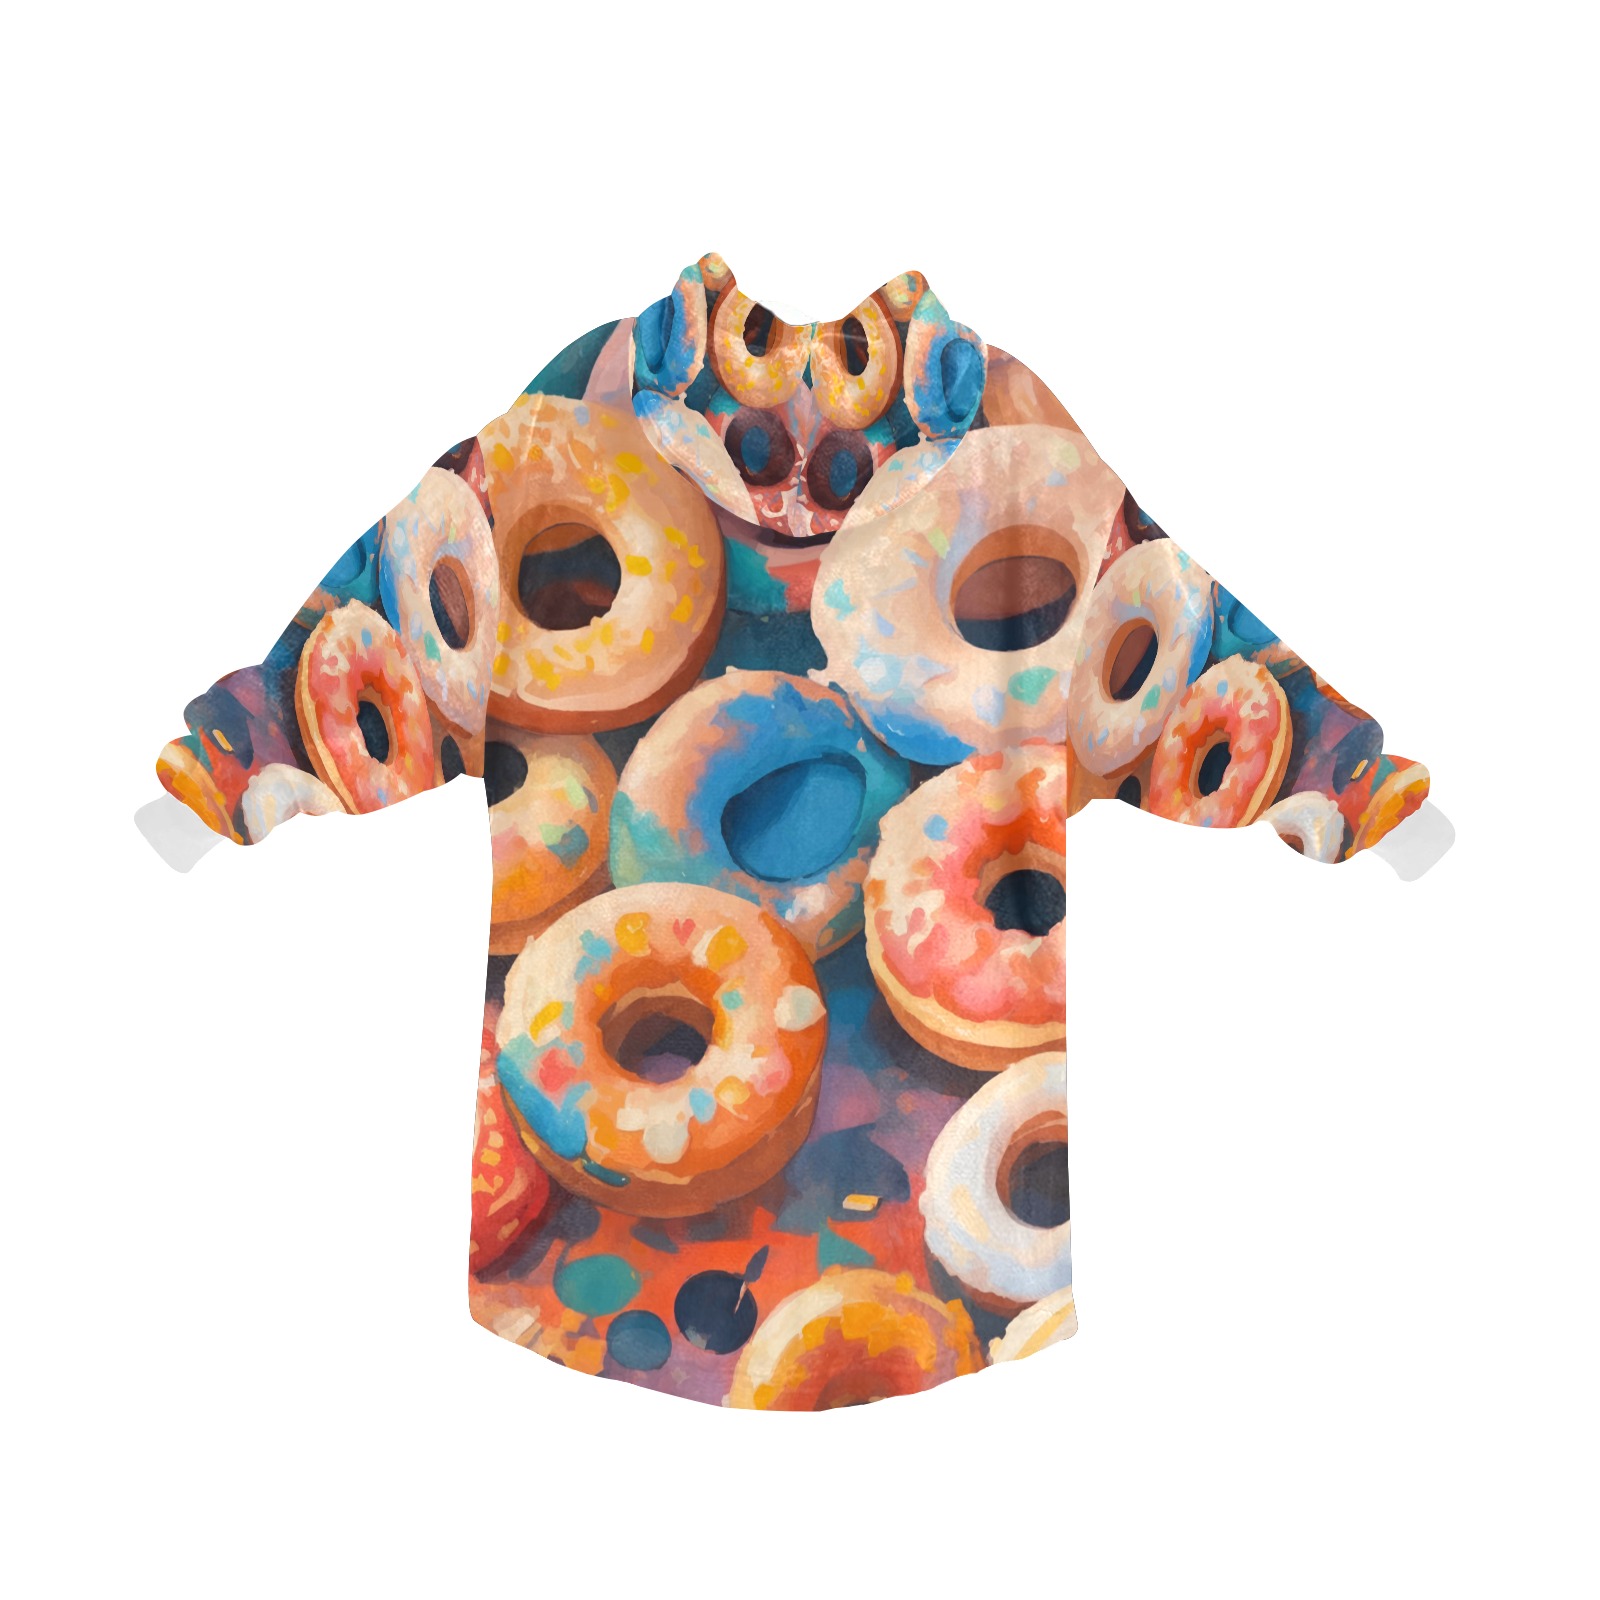 Colorful pattern of fresh donuts. Sweet dessert. Blanket Hoodie for Kids